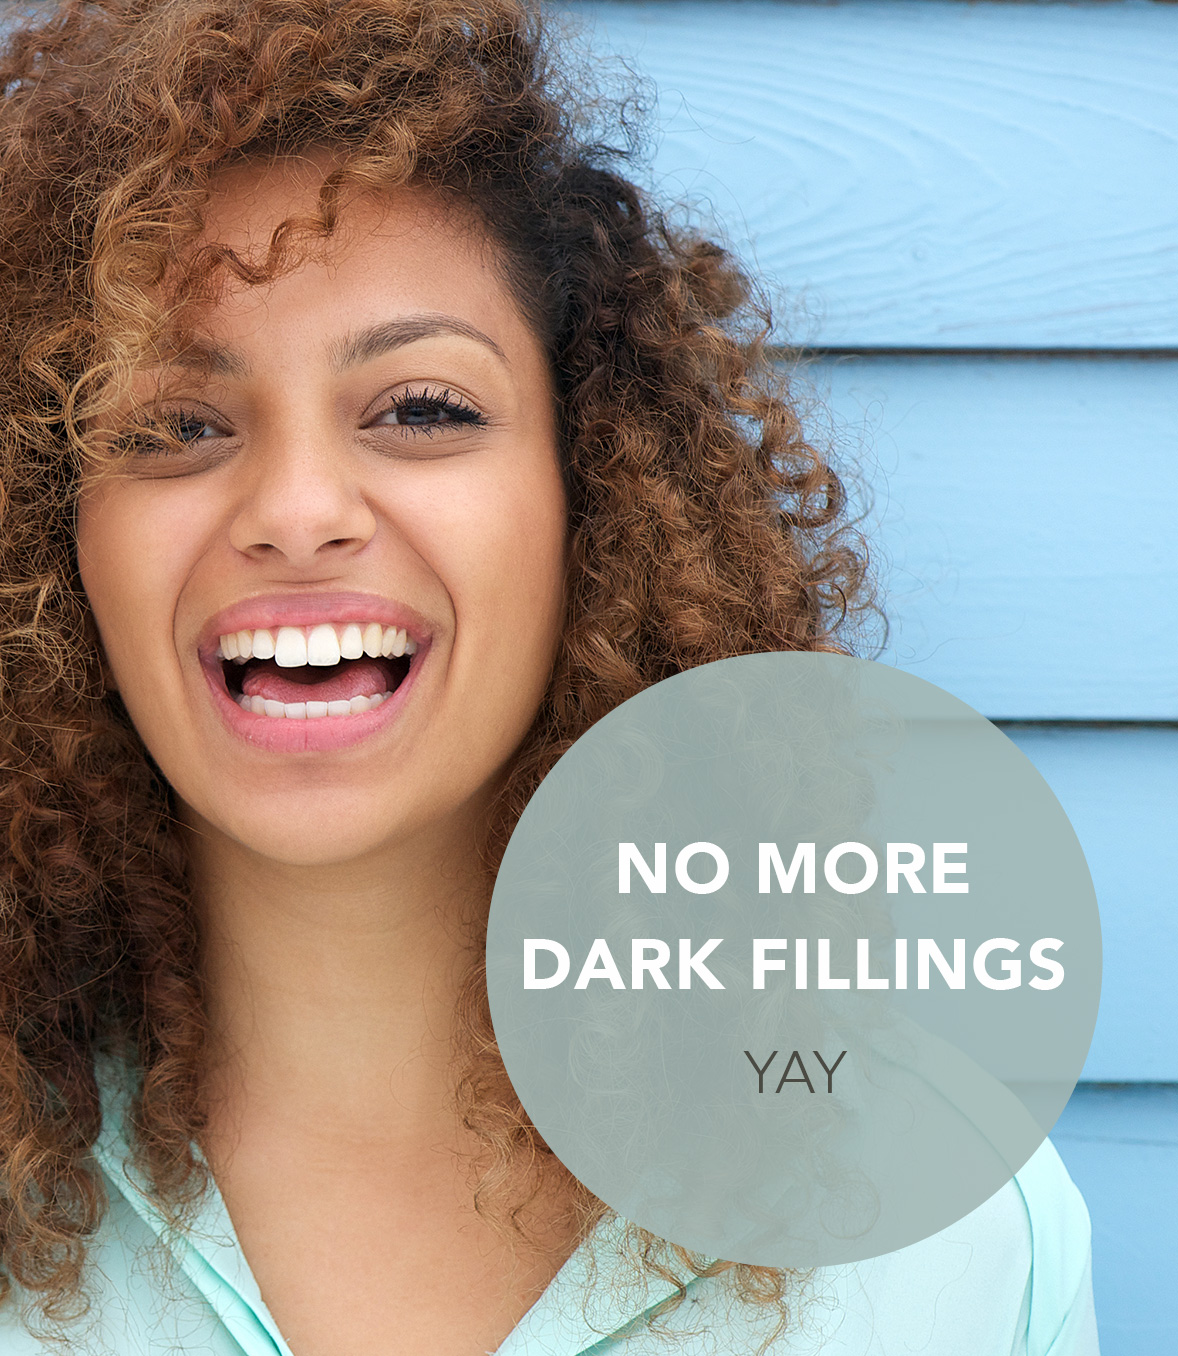 no more dark fillings - yay